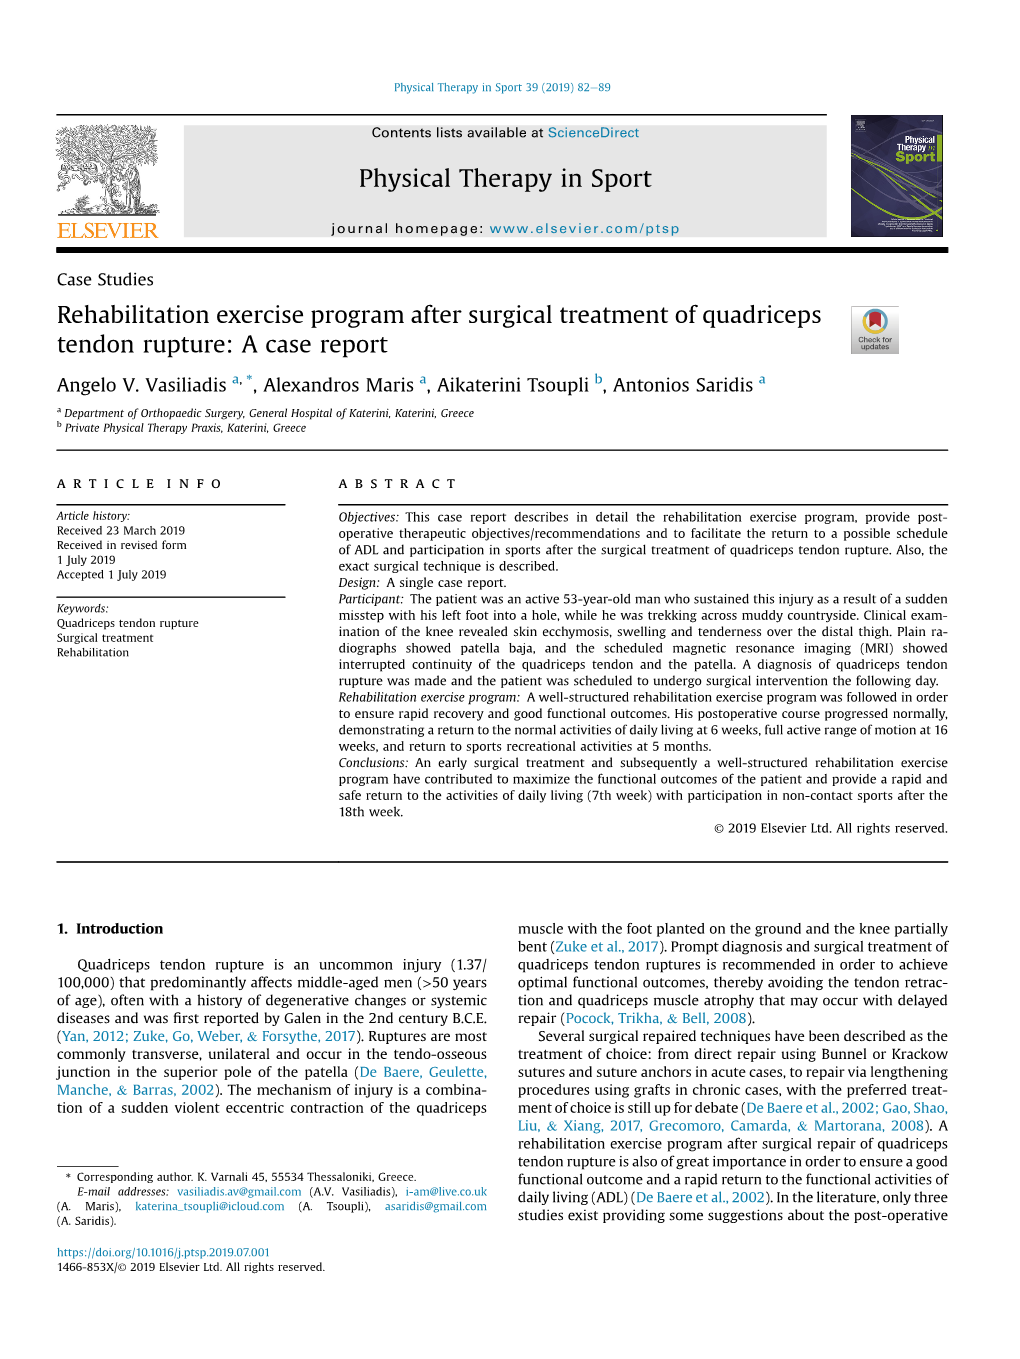 Rehabilitation Exercise Program After Surgical Treatment of Quadriceps Tendon Rupture: a Case Report